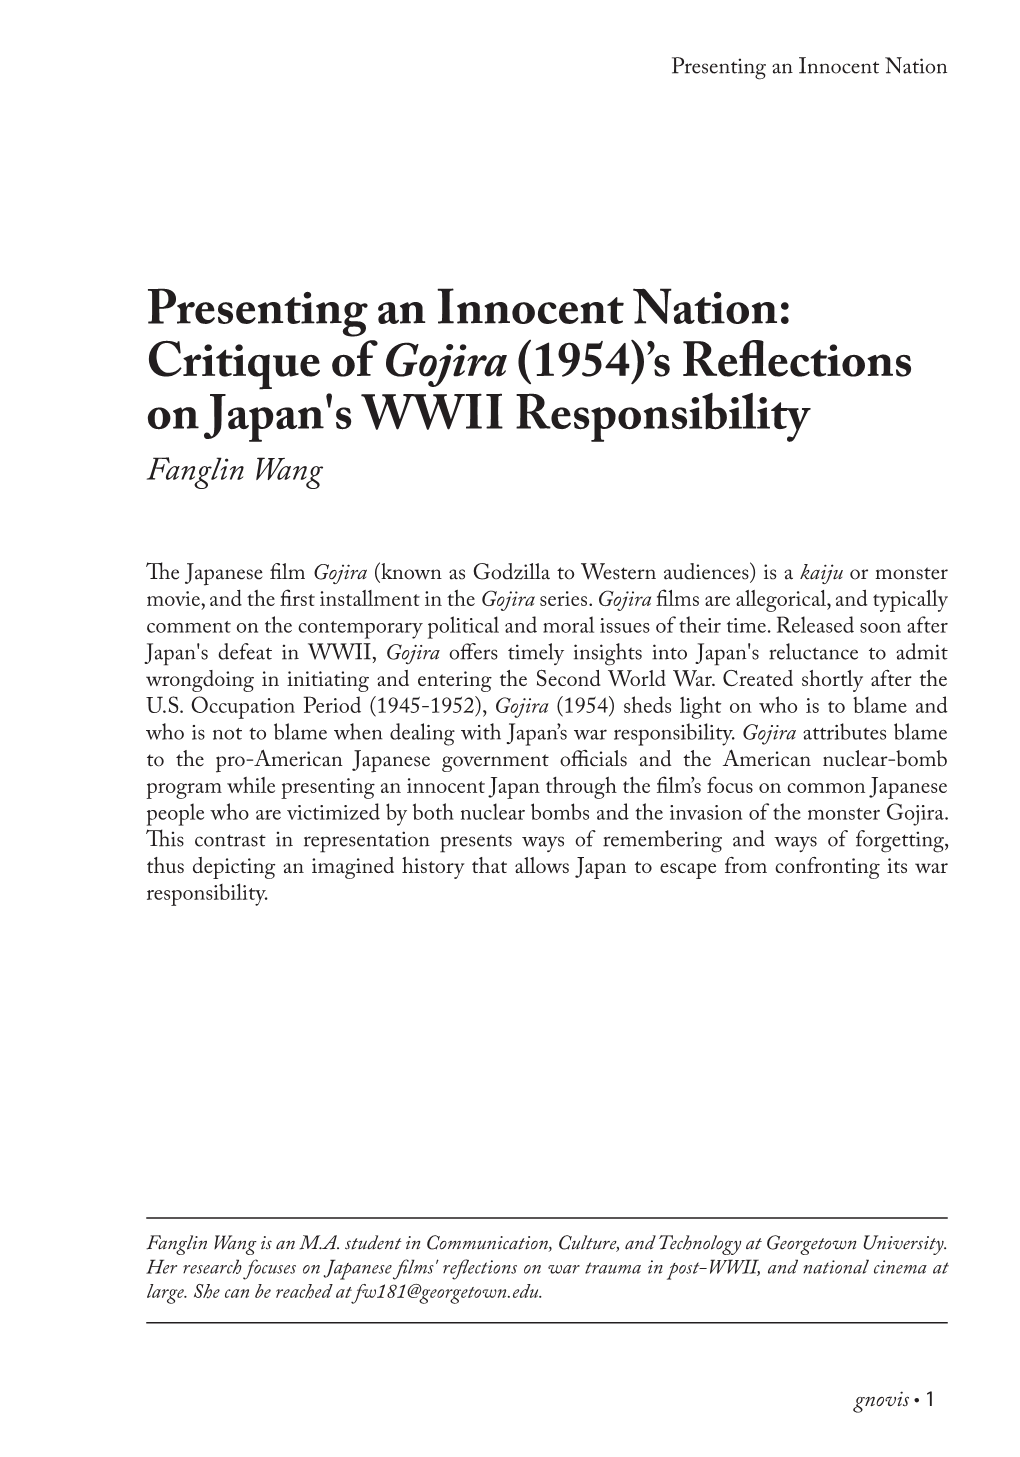 Presenting an Innocent Nation- Critique of Gojira.Pdf (504Kb)